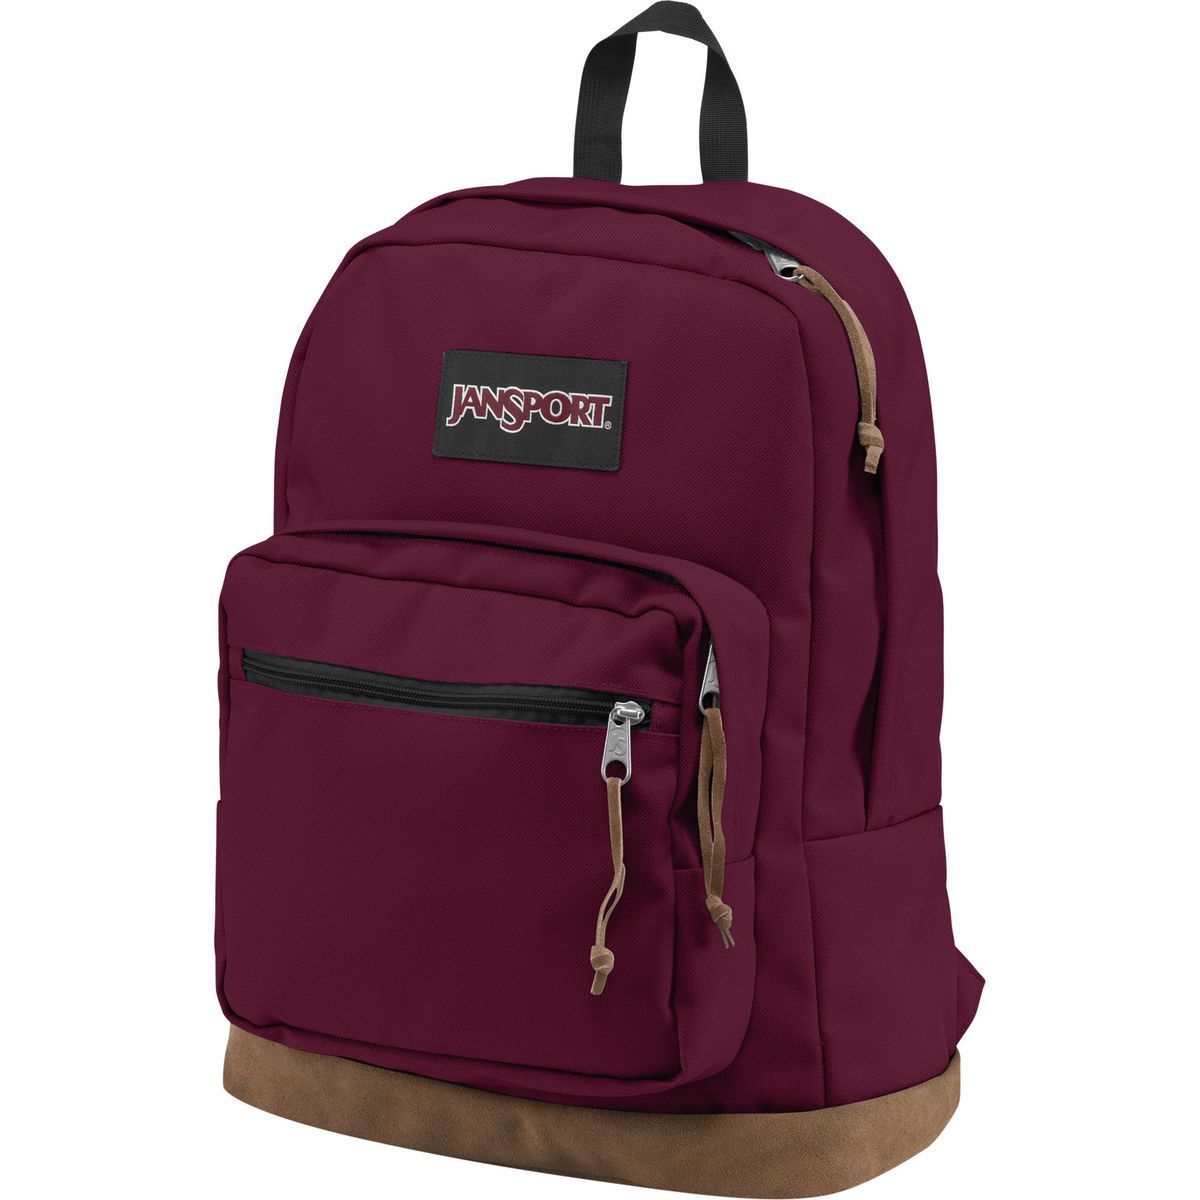 JanSport Right Pack 31L Backpack | eBay